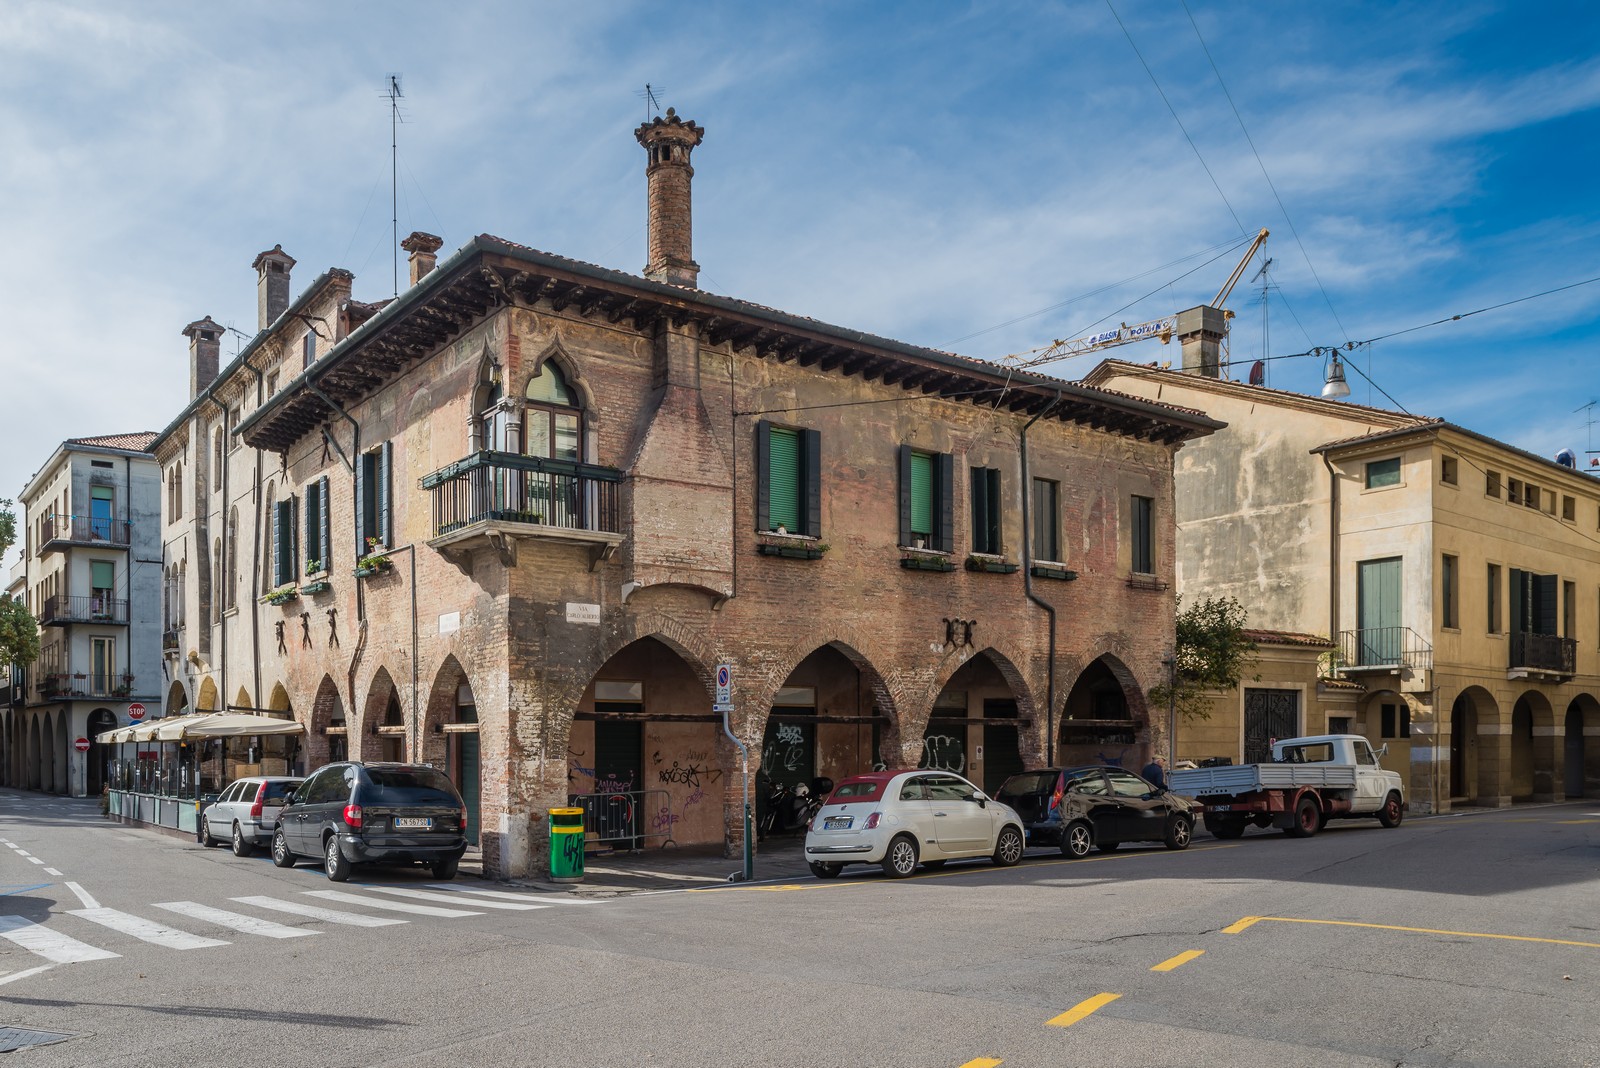 Casa dipinta sec. XVII (casa) - Treviso (TV) 